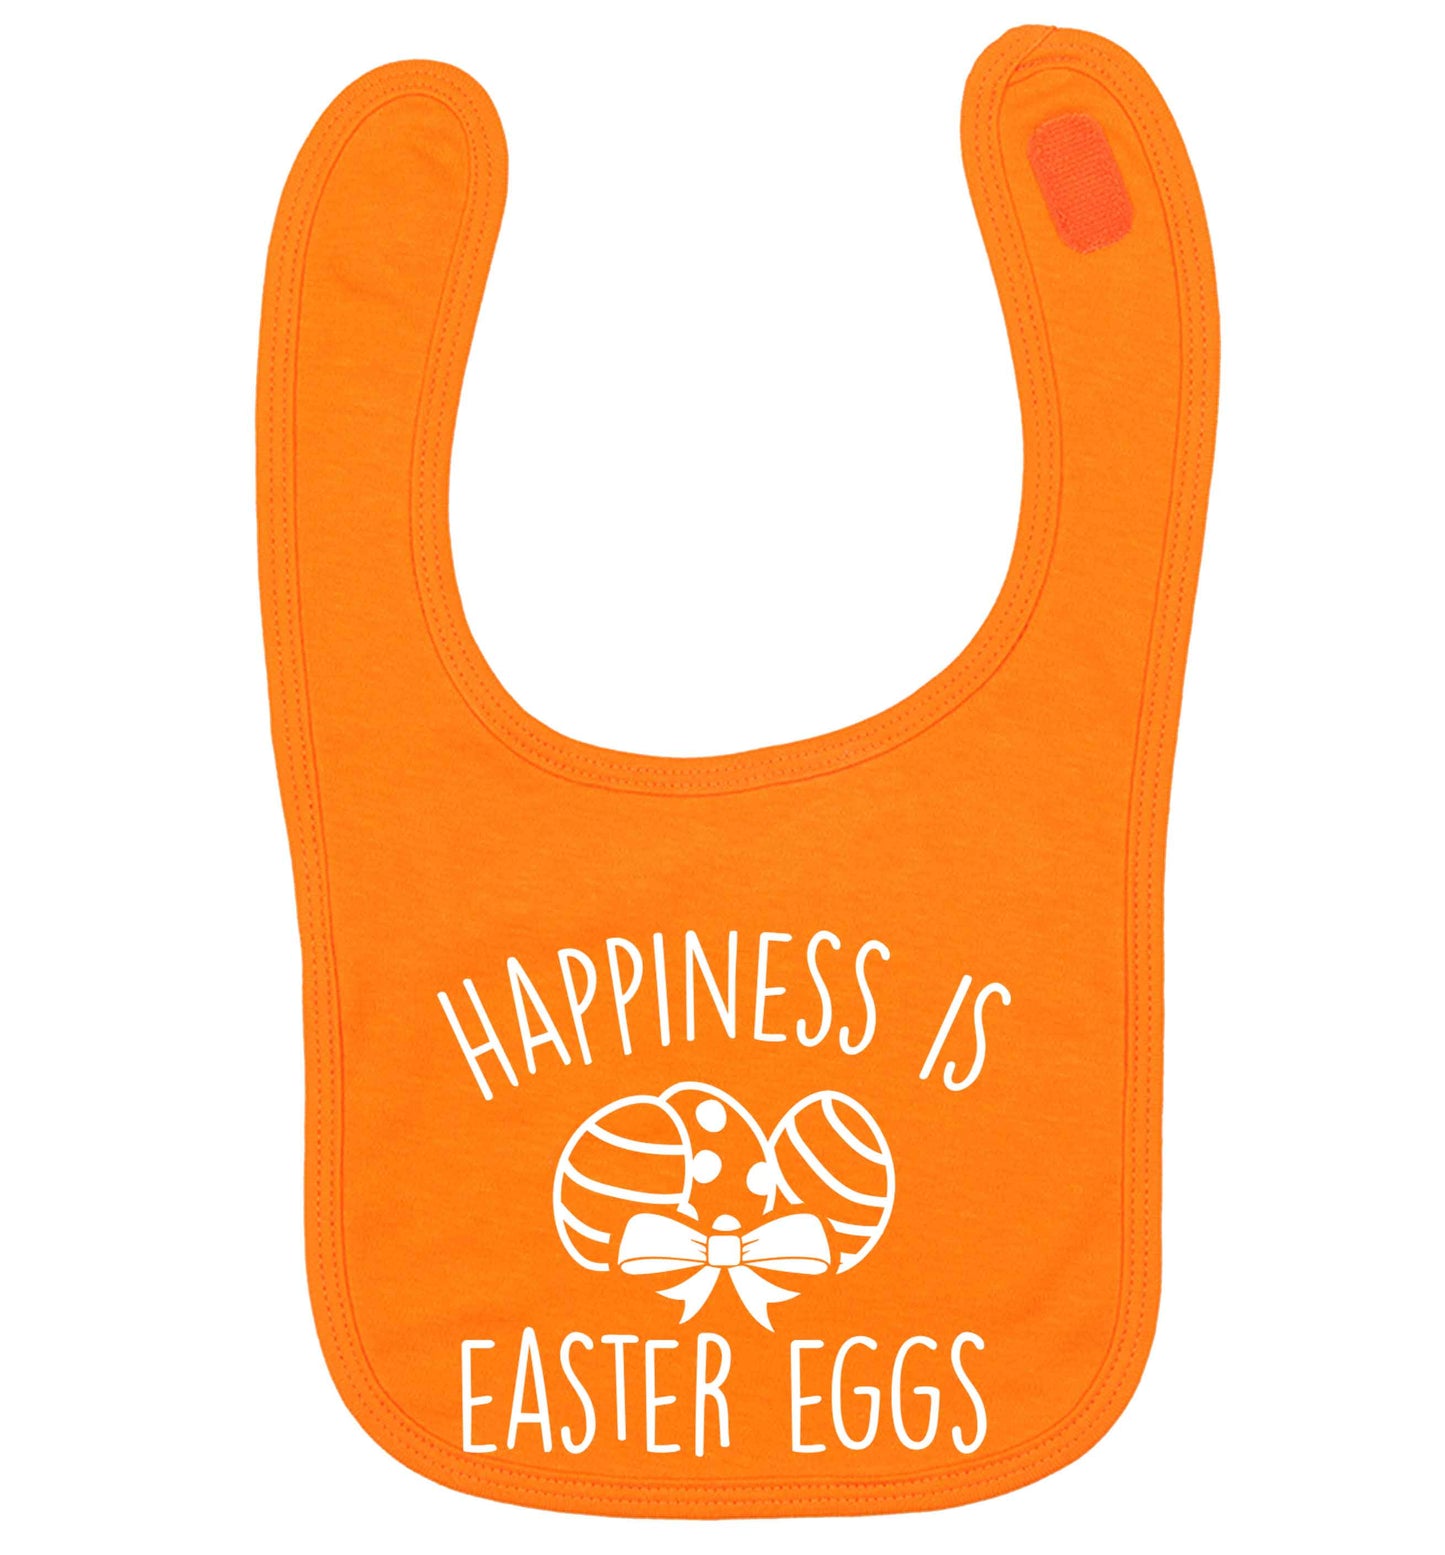 Happiness is Easter eggs orange baby bib